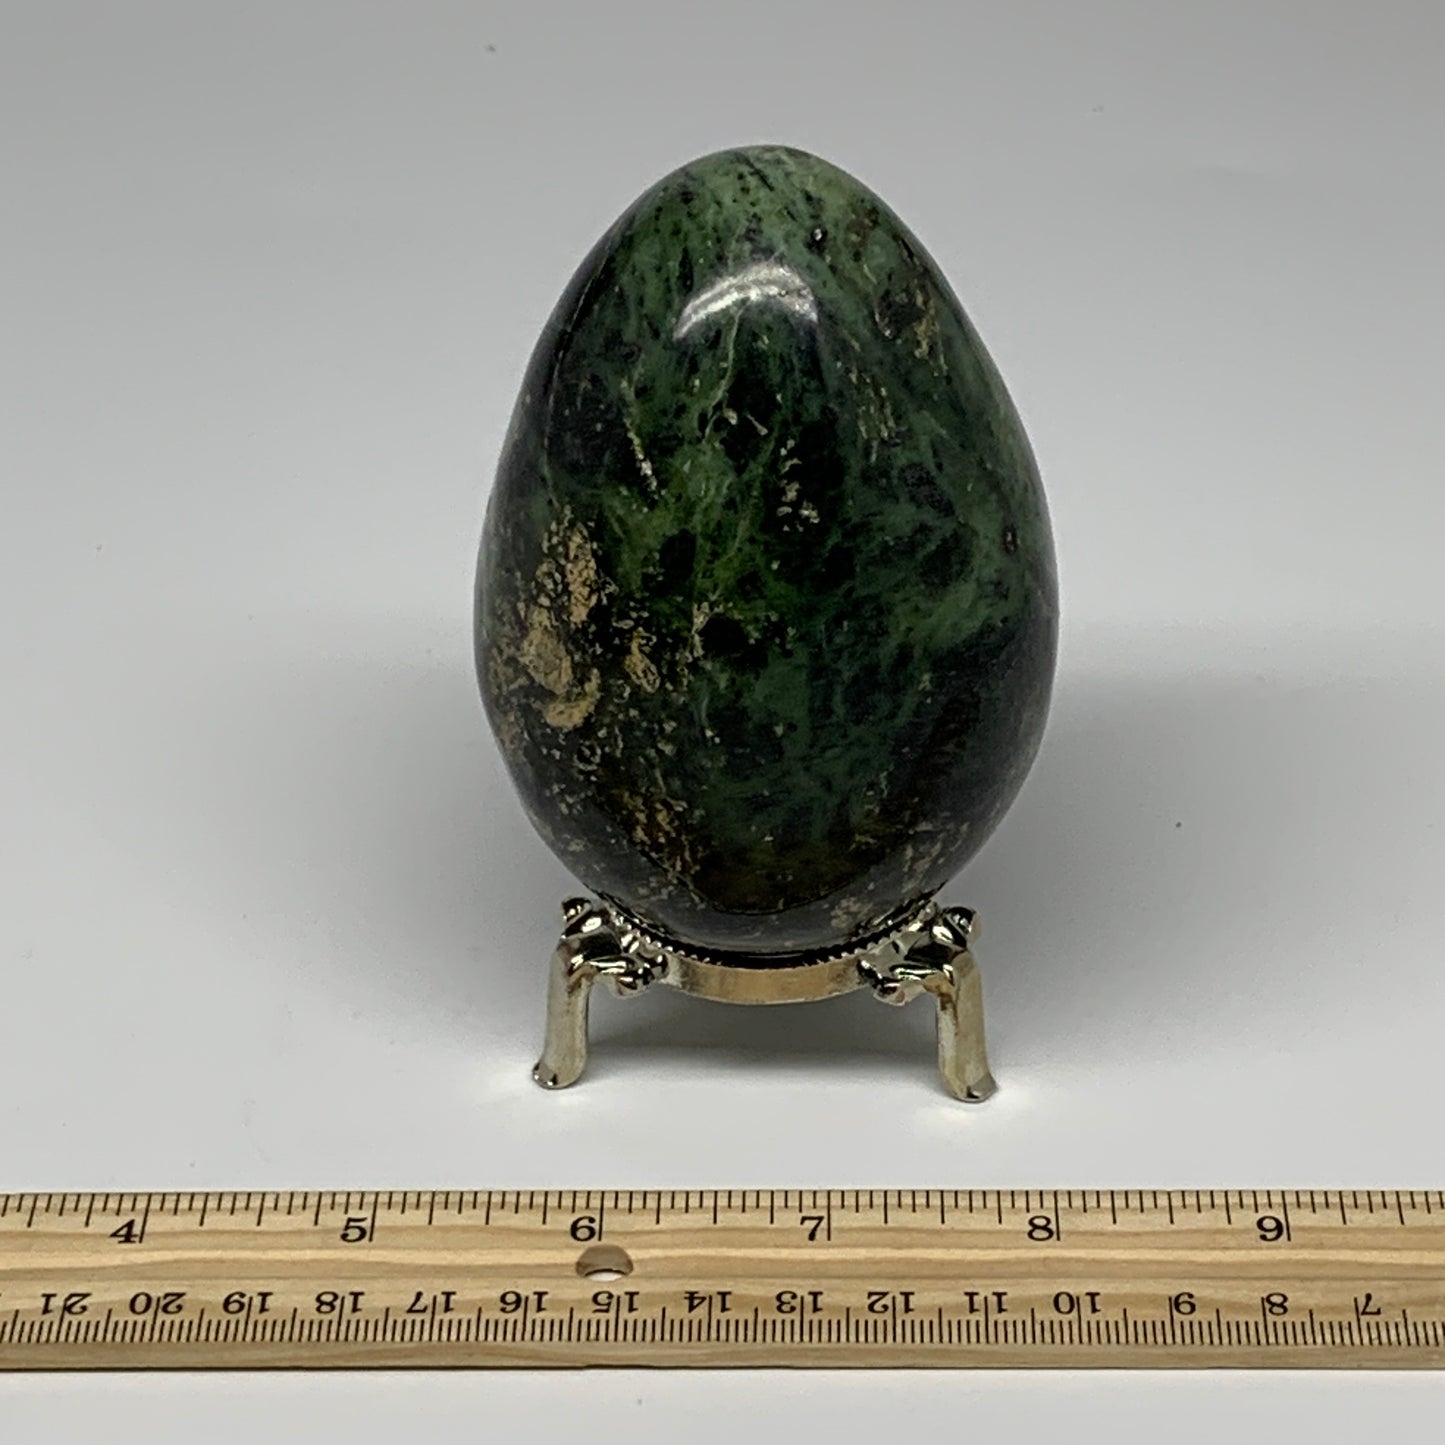 573g, 3.8"x2.7" Natural Green Nephrite Jade Egg Gemstone, @Pakistan, B25366